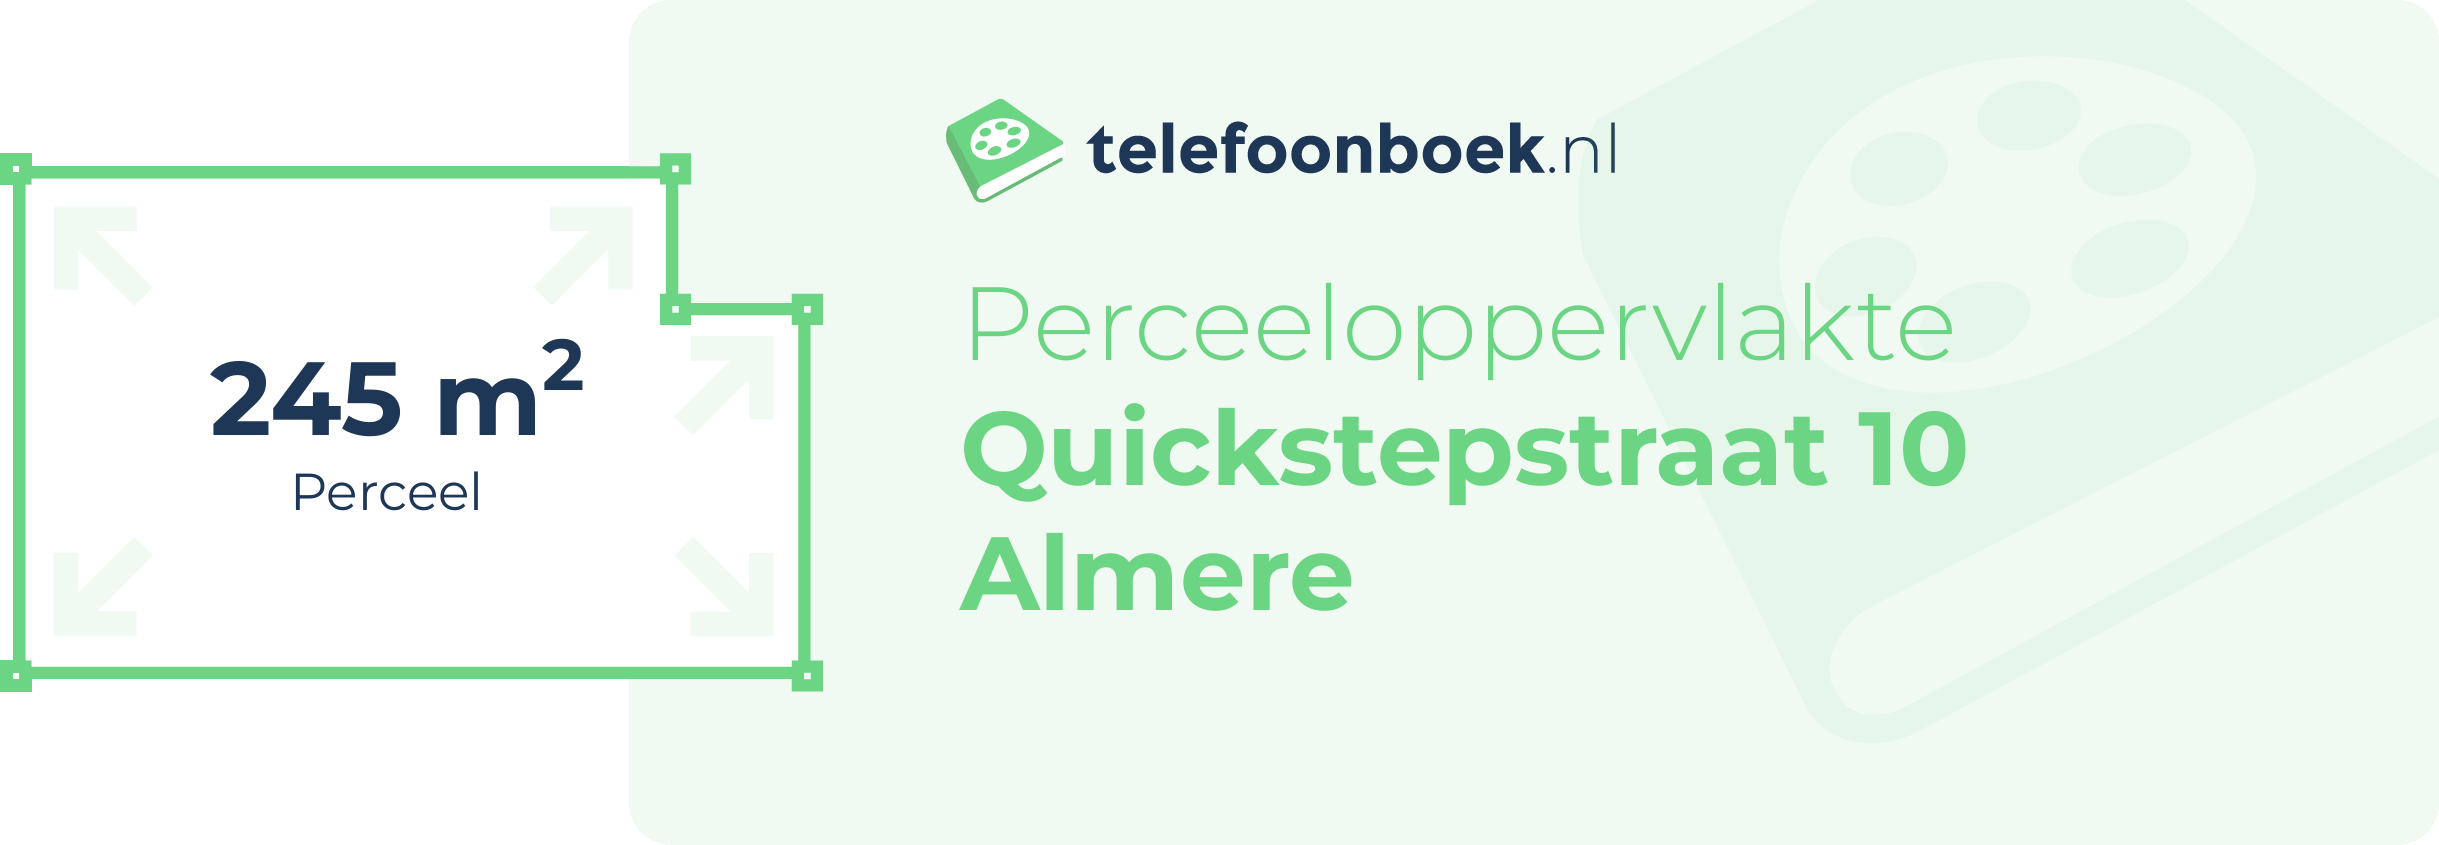 Perceeloppervlakte Quickstepstraat 10 Almere